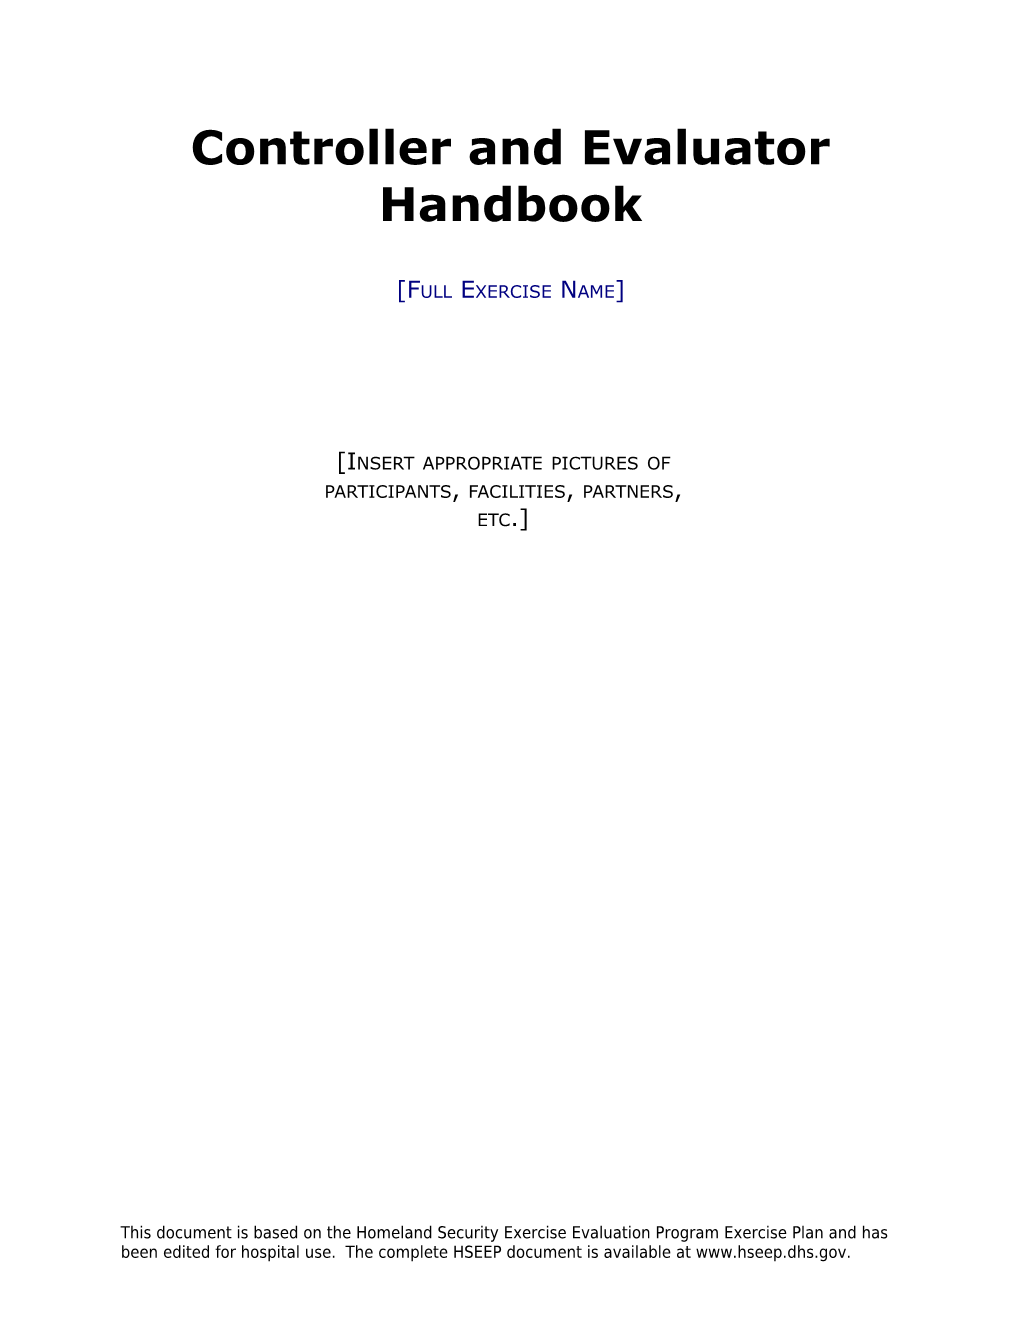 Controller and Evaluator Handbook